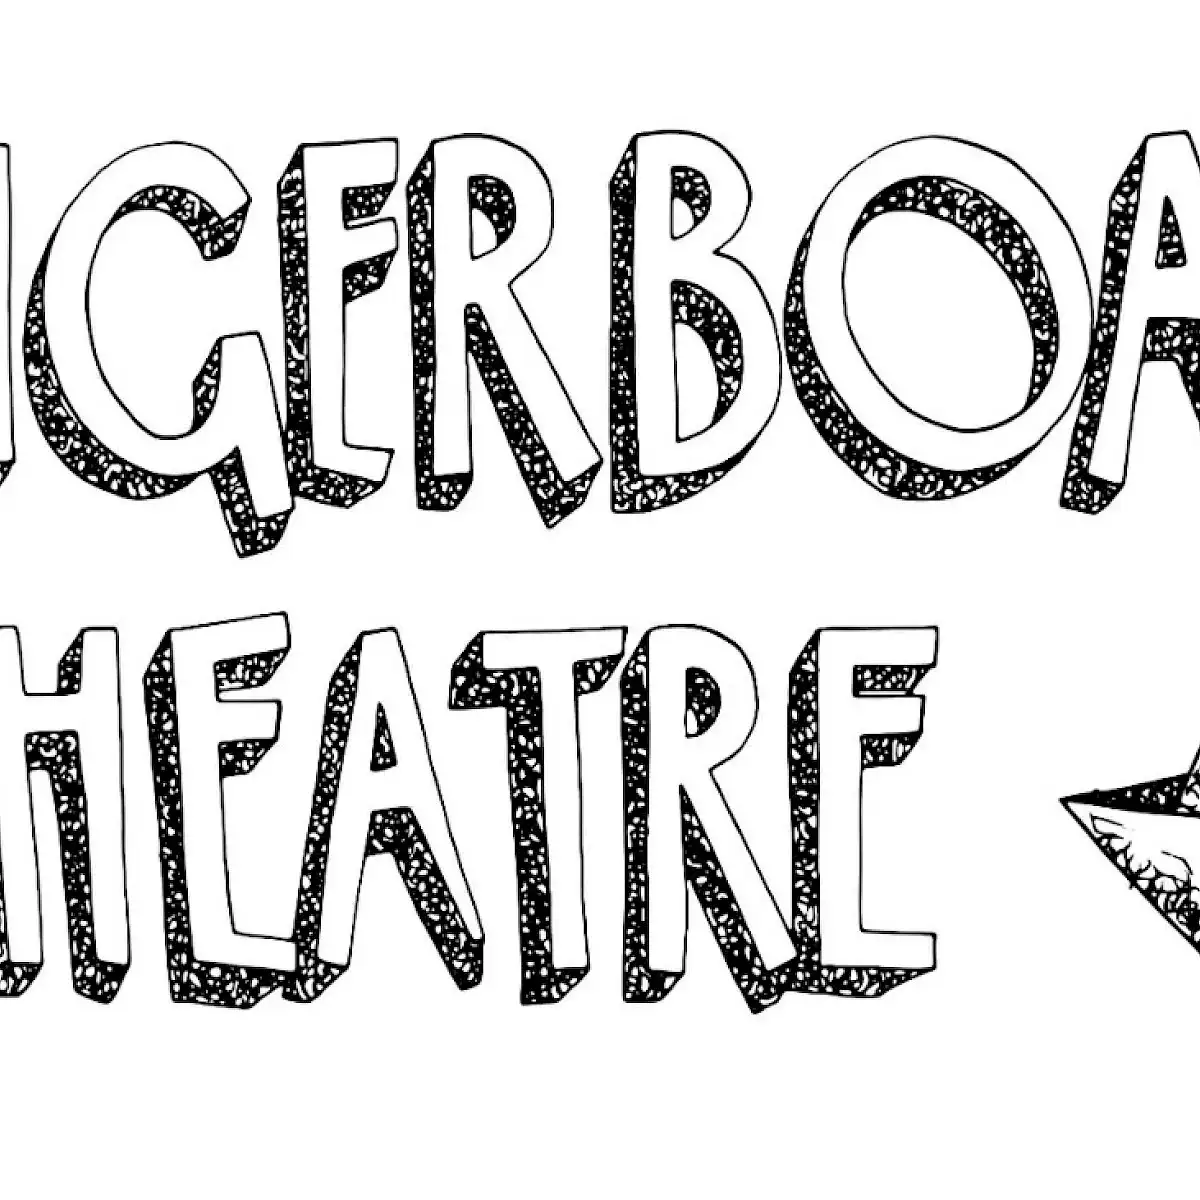 Tigerboat Theatre